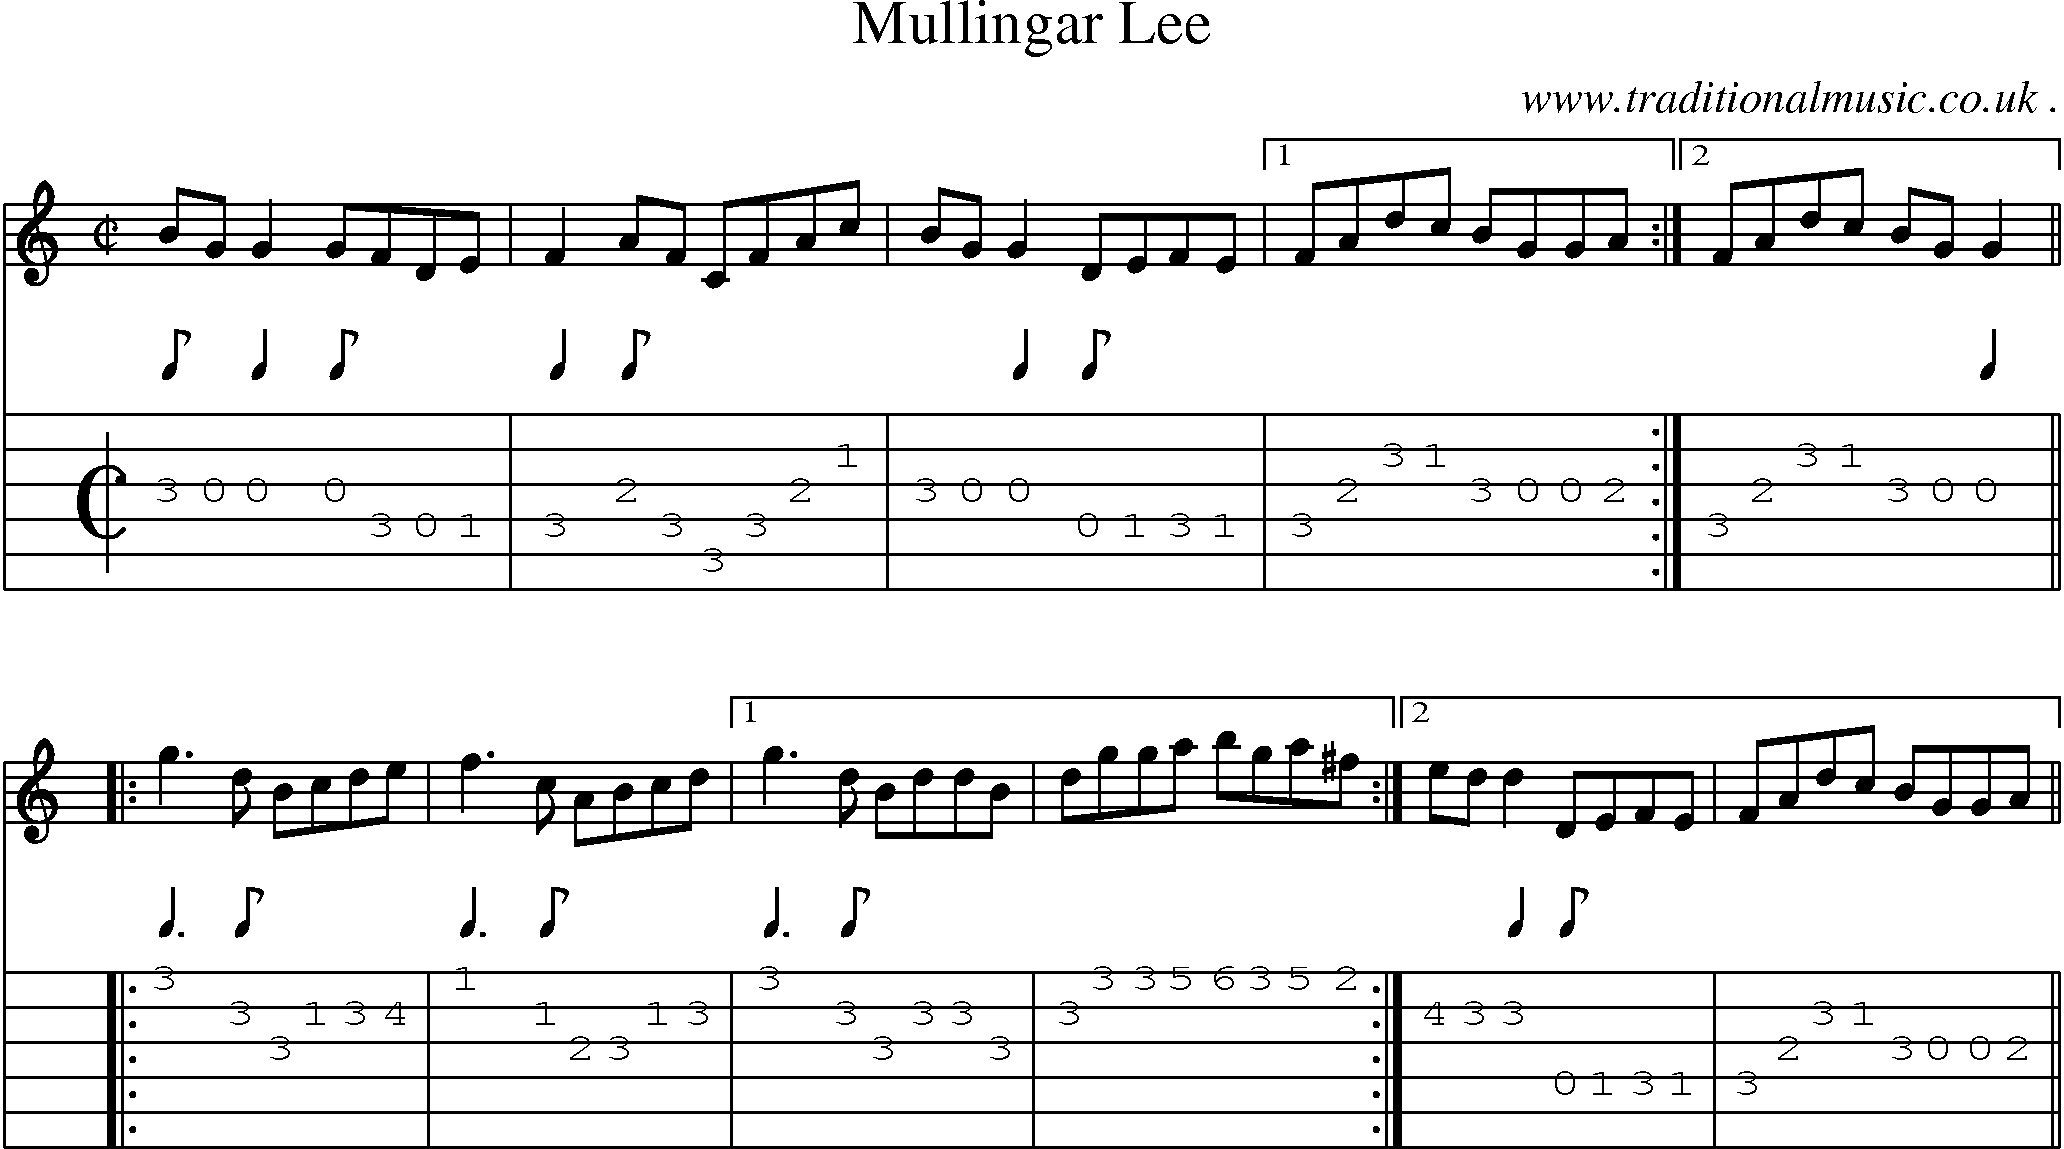 Sheet-Music and Guitar Tabs for Mullingar Lee